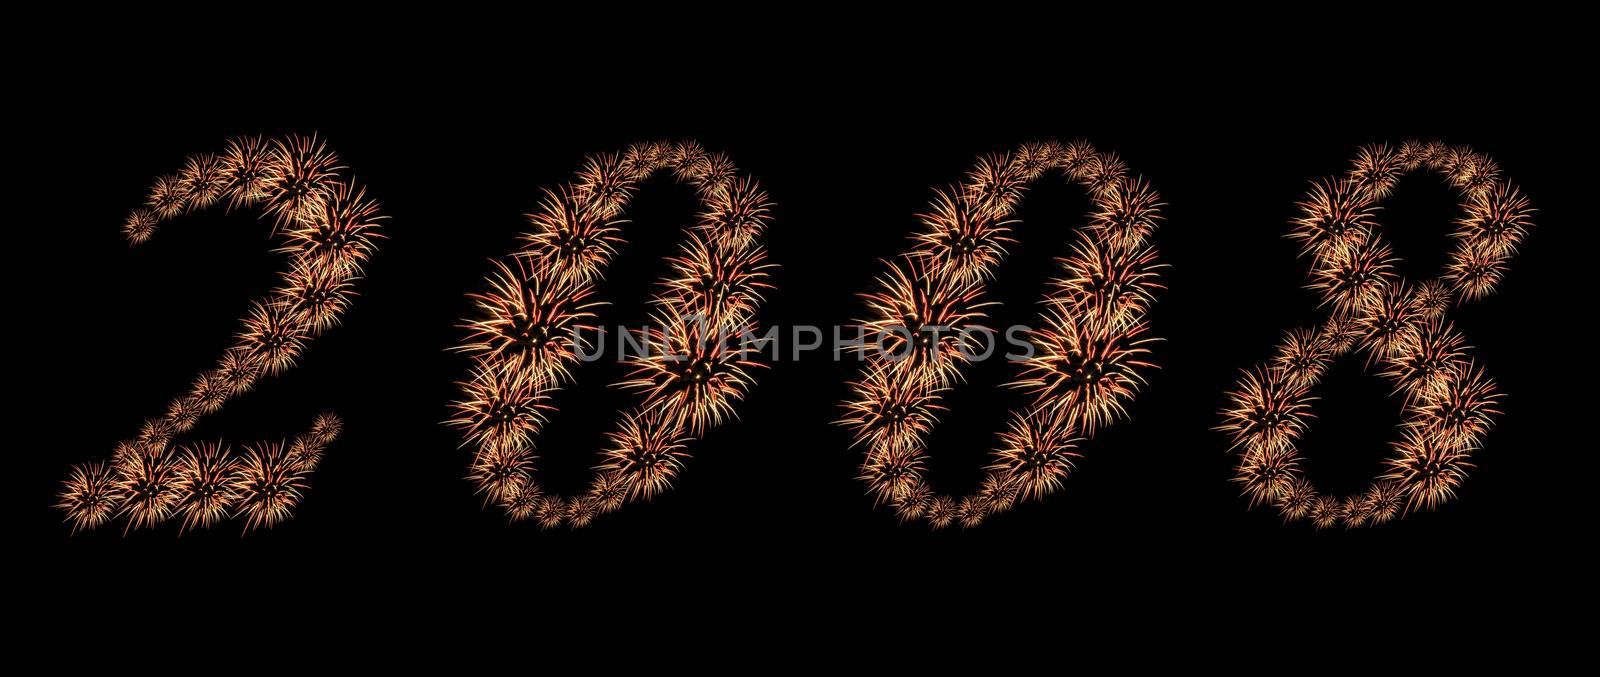 Firework for date 2008. 11811 x 5000 pixels.